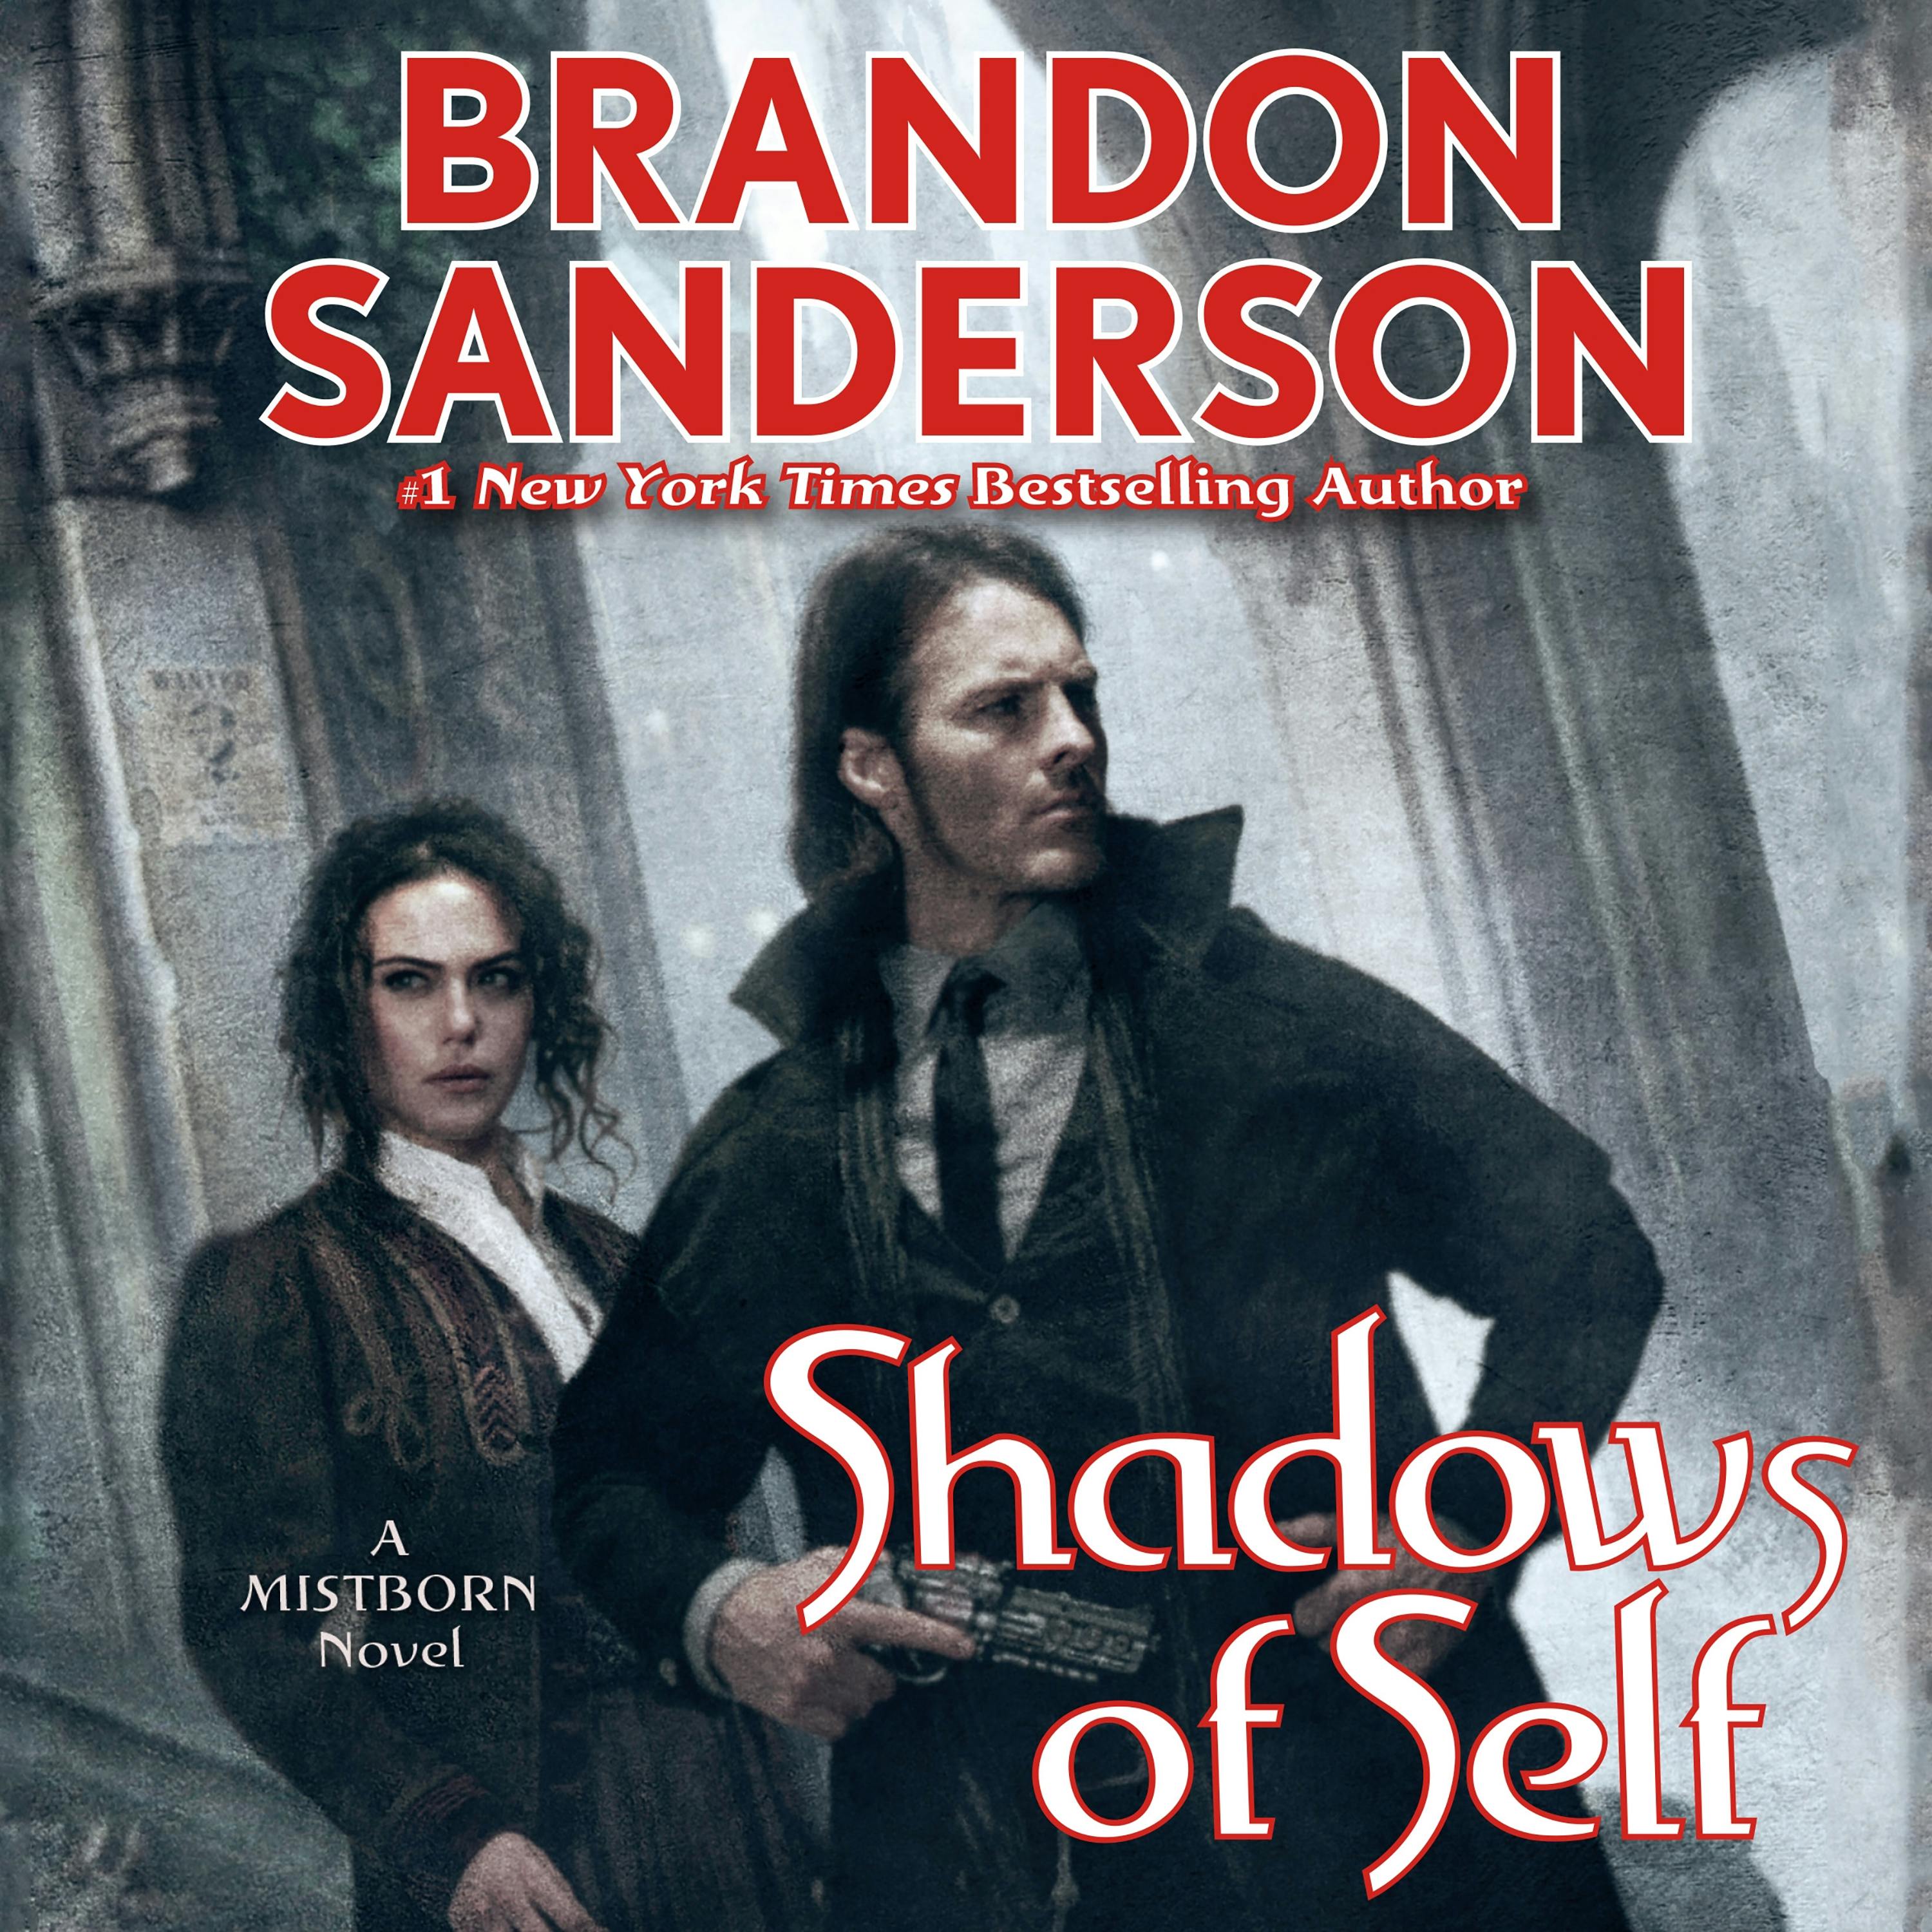 Brandon Sanderson: 'After a dozen rejected novels, you think maybe